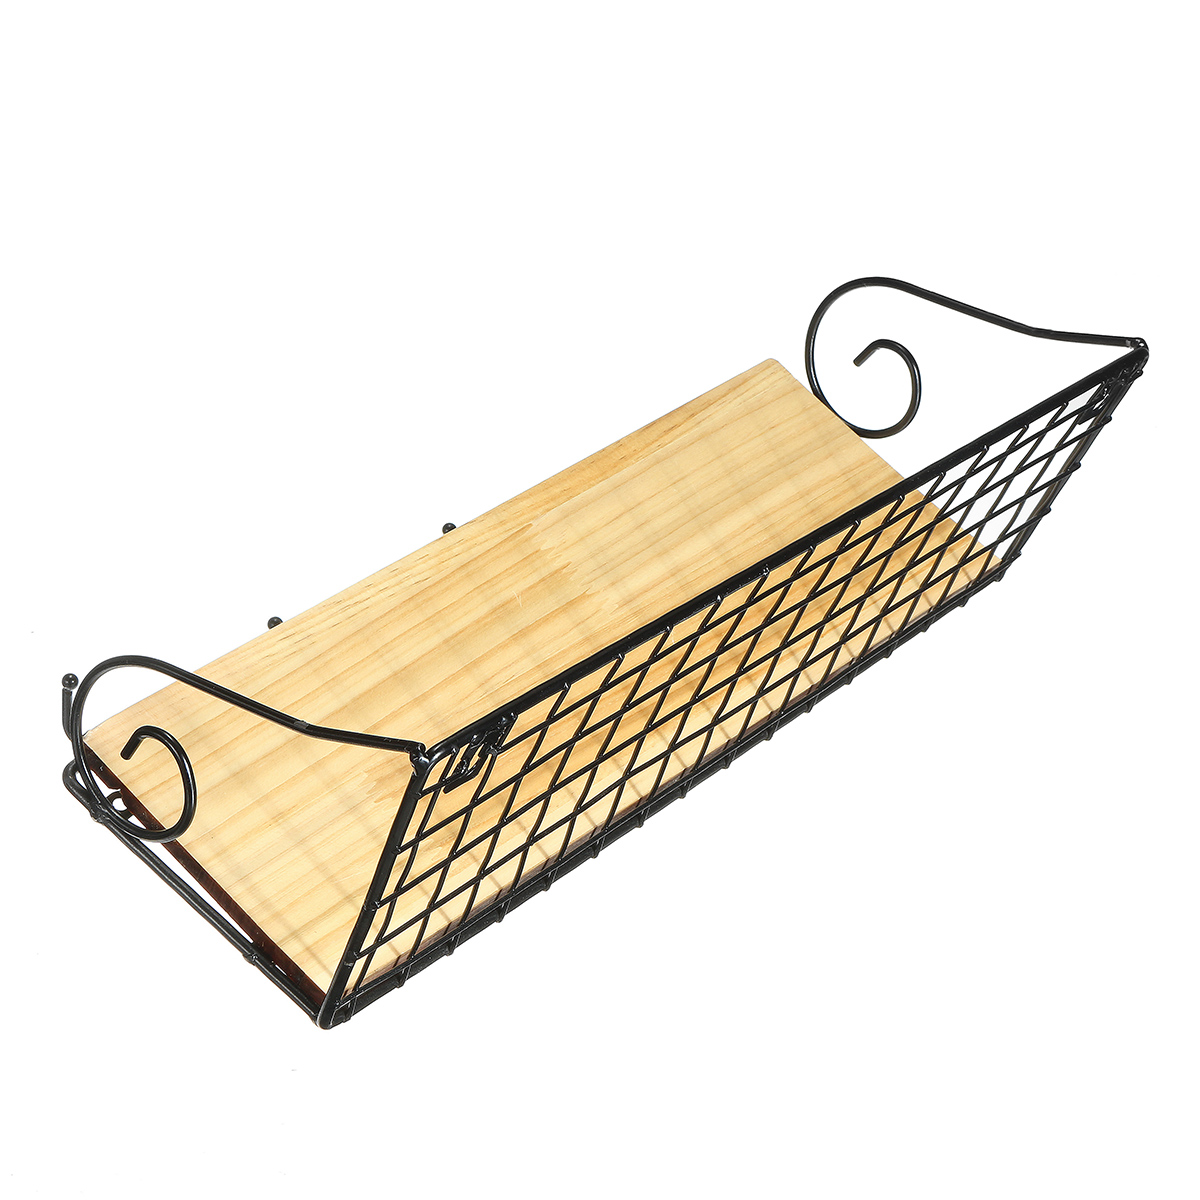 Hanging-Wall-Mounted-Rack-Storage-Organizer-Wood-Home-Display-Storage-Baskets-w-Iron-Hook-1517311-5